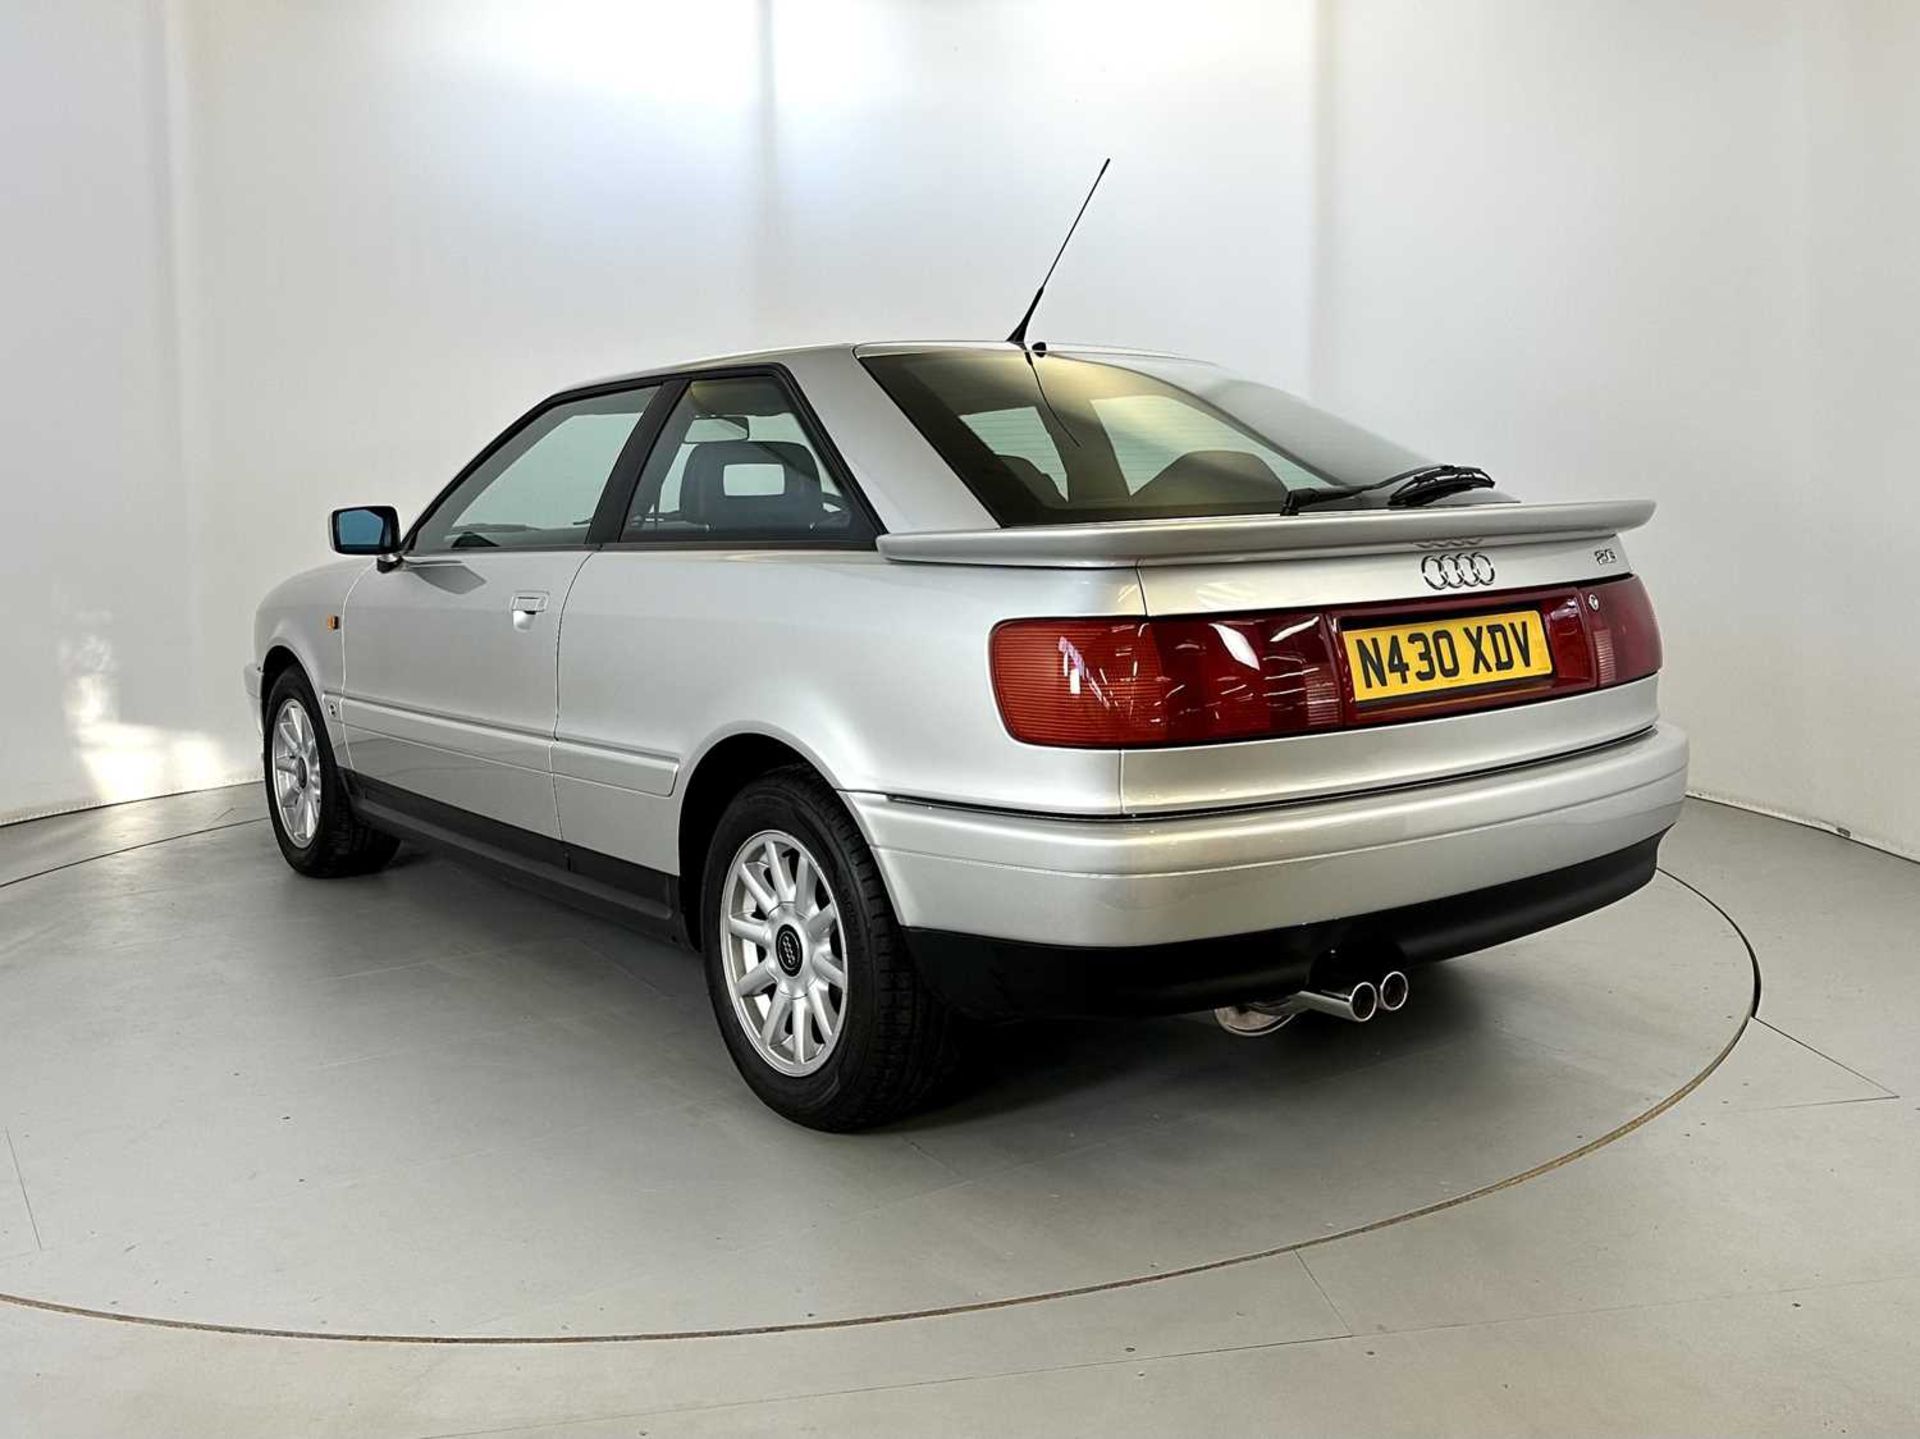 1995 Audi 80 Coupe V6 - Image 7 of 30